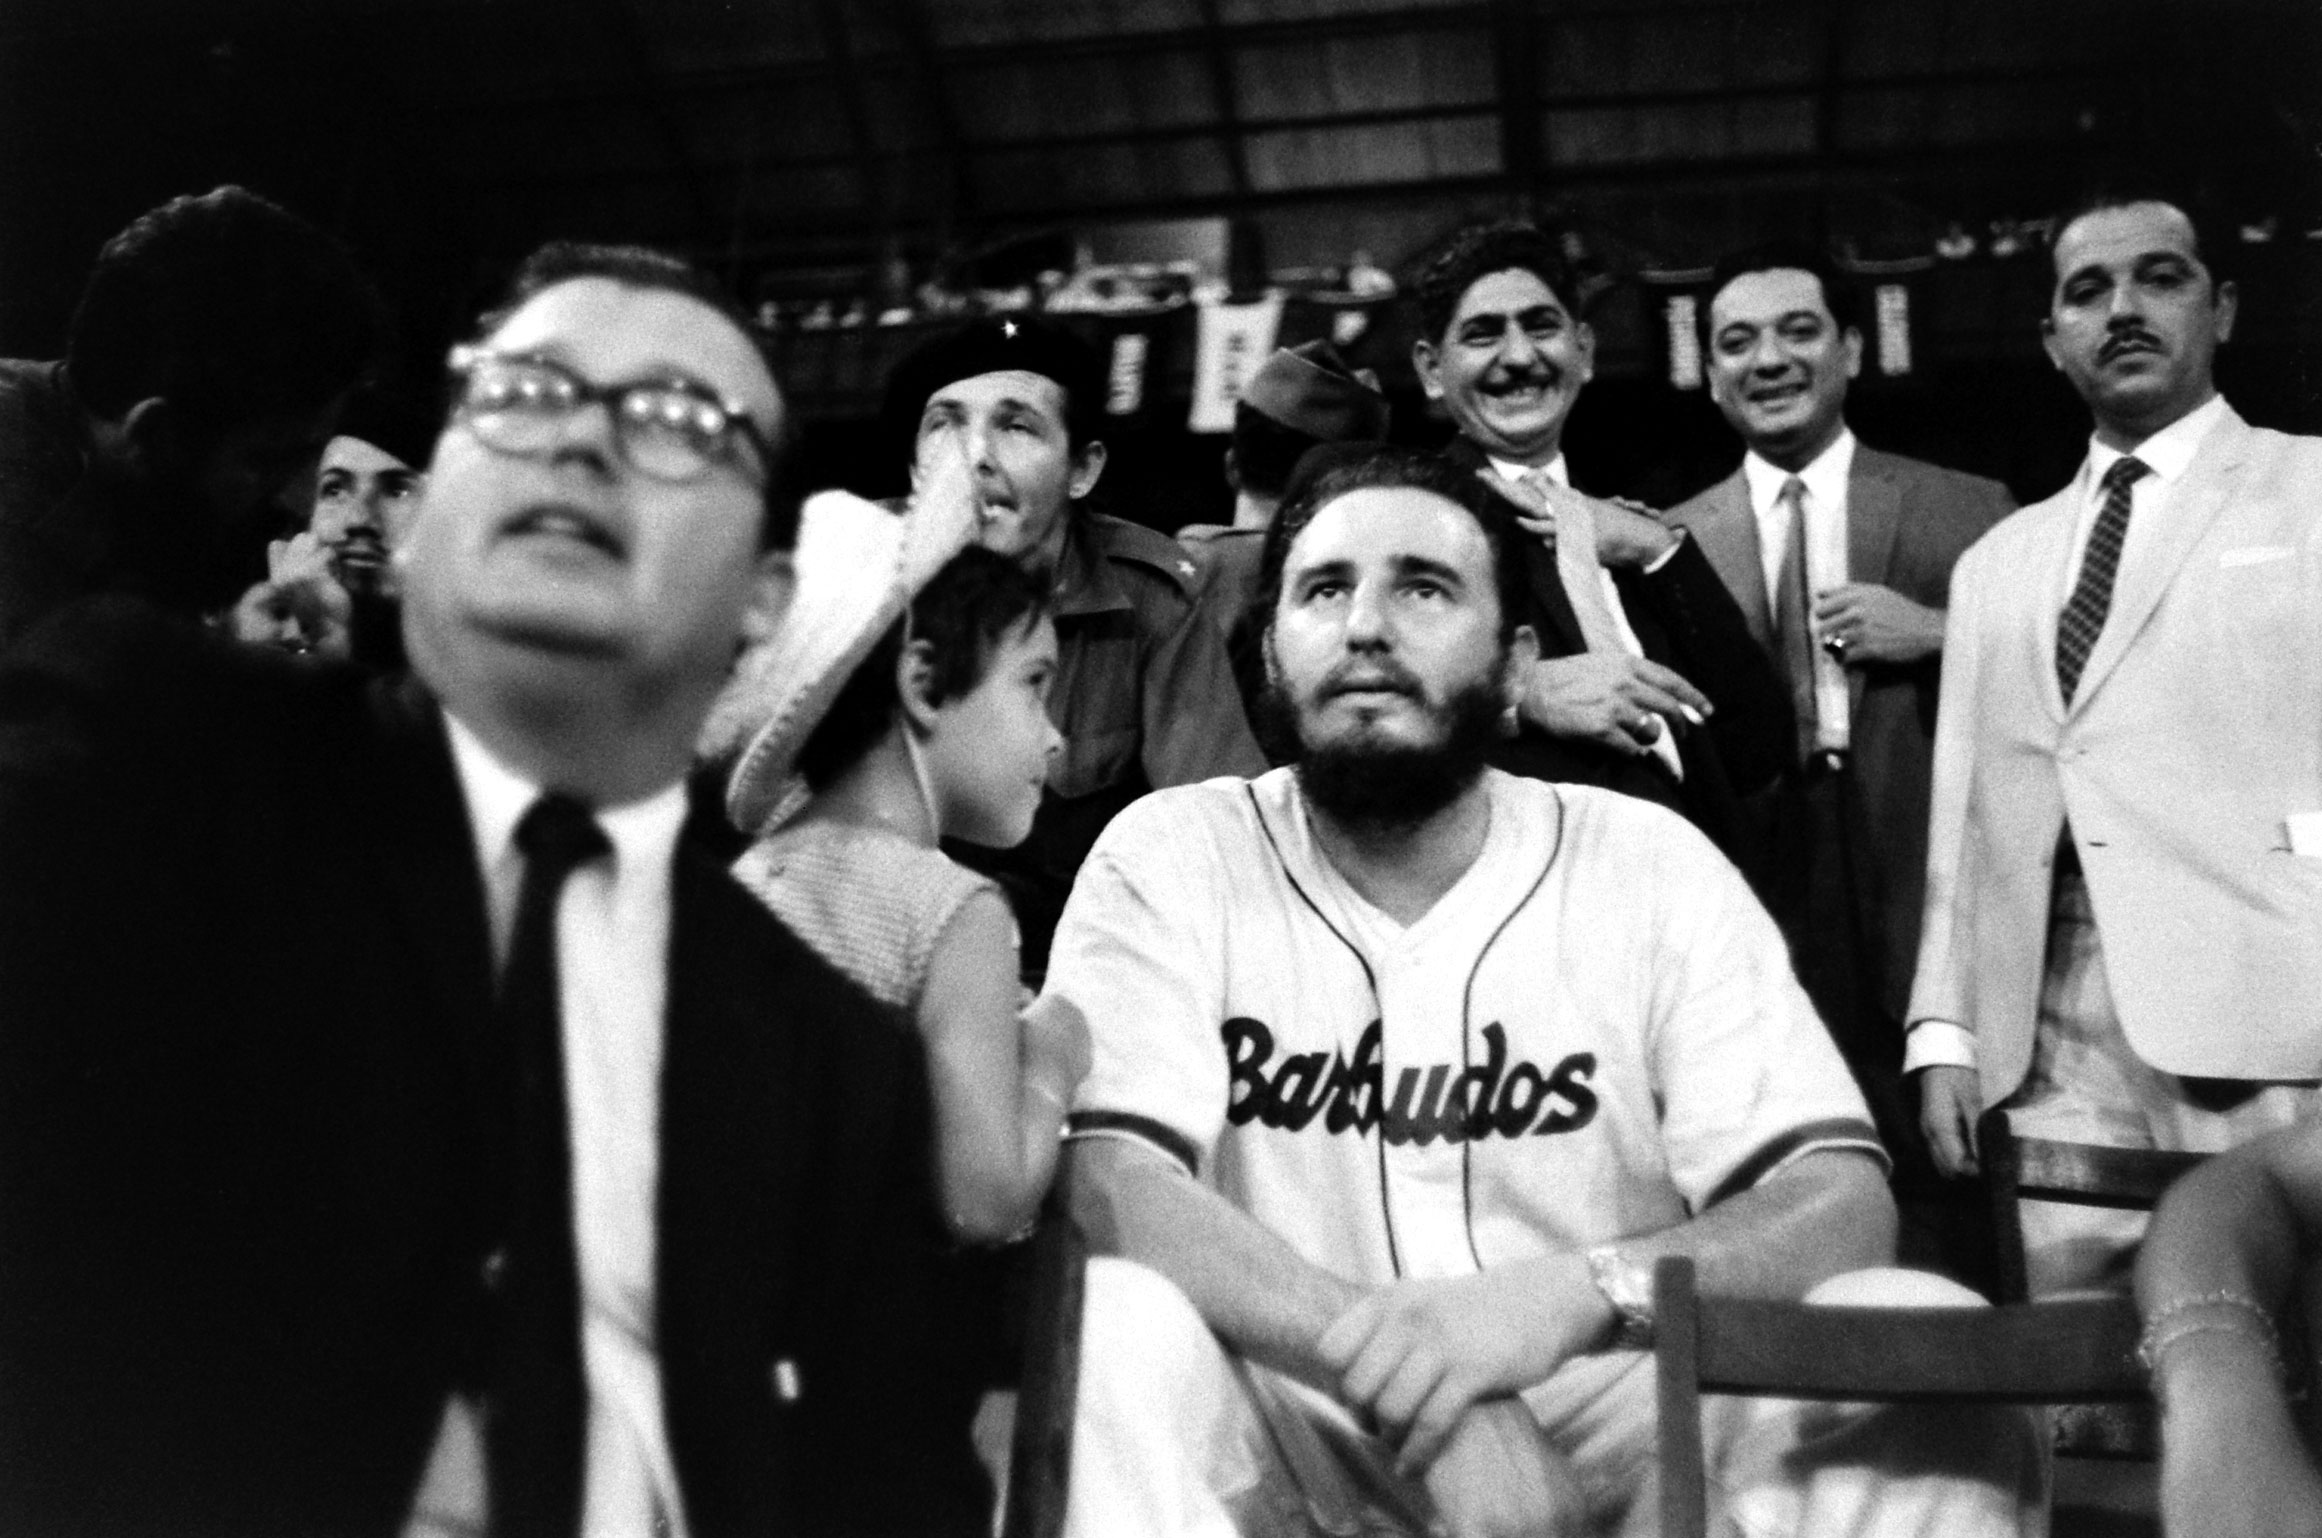 Fidel Castro watches a baseball game, Cuba, 1959.